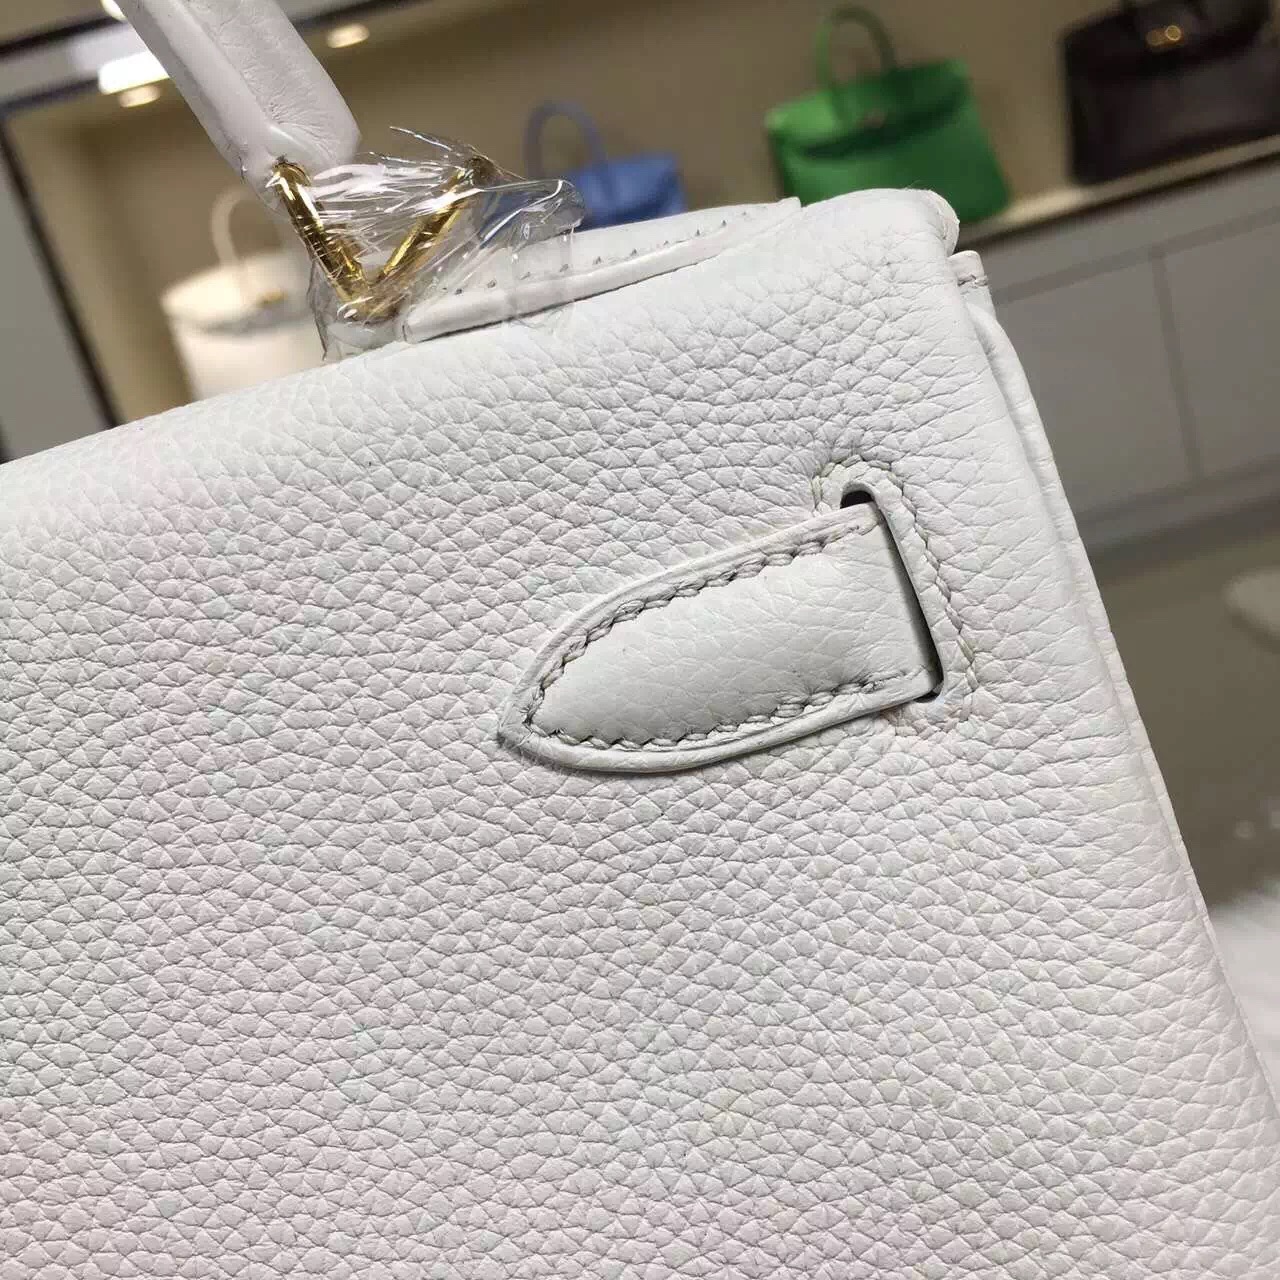 Luxury Women&#8217;s Handbag Hermes Pure White Original Togo Leather Kelly Bag28CM